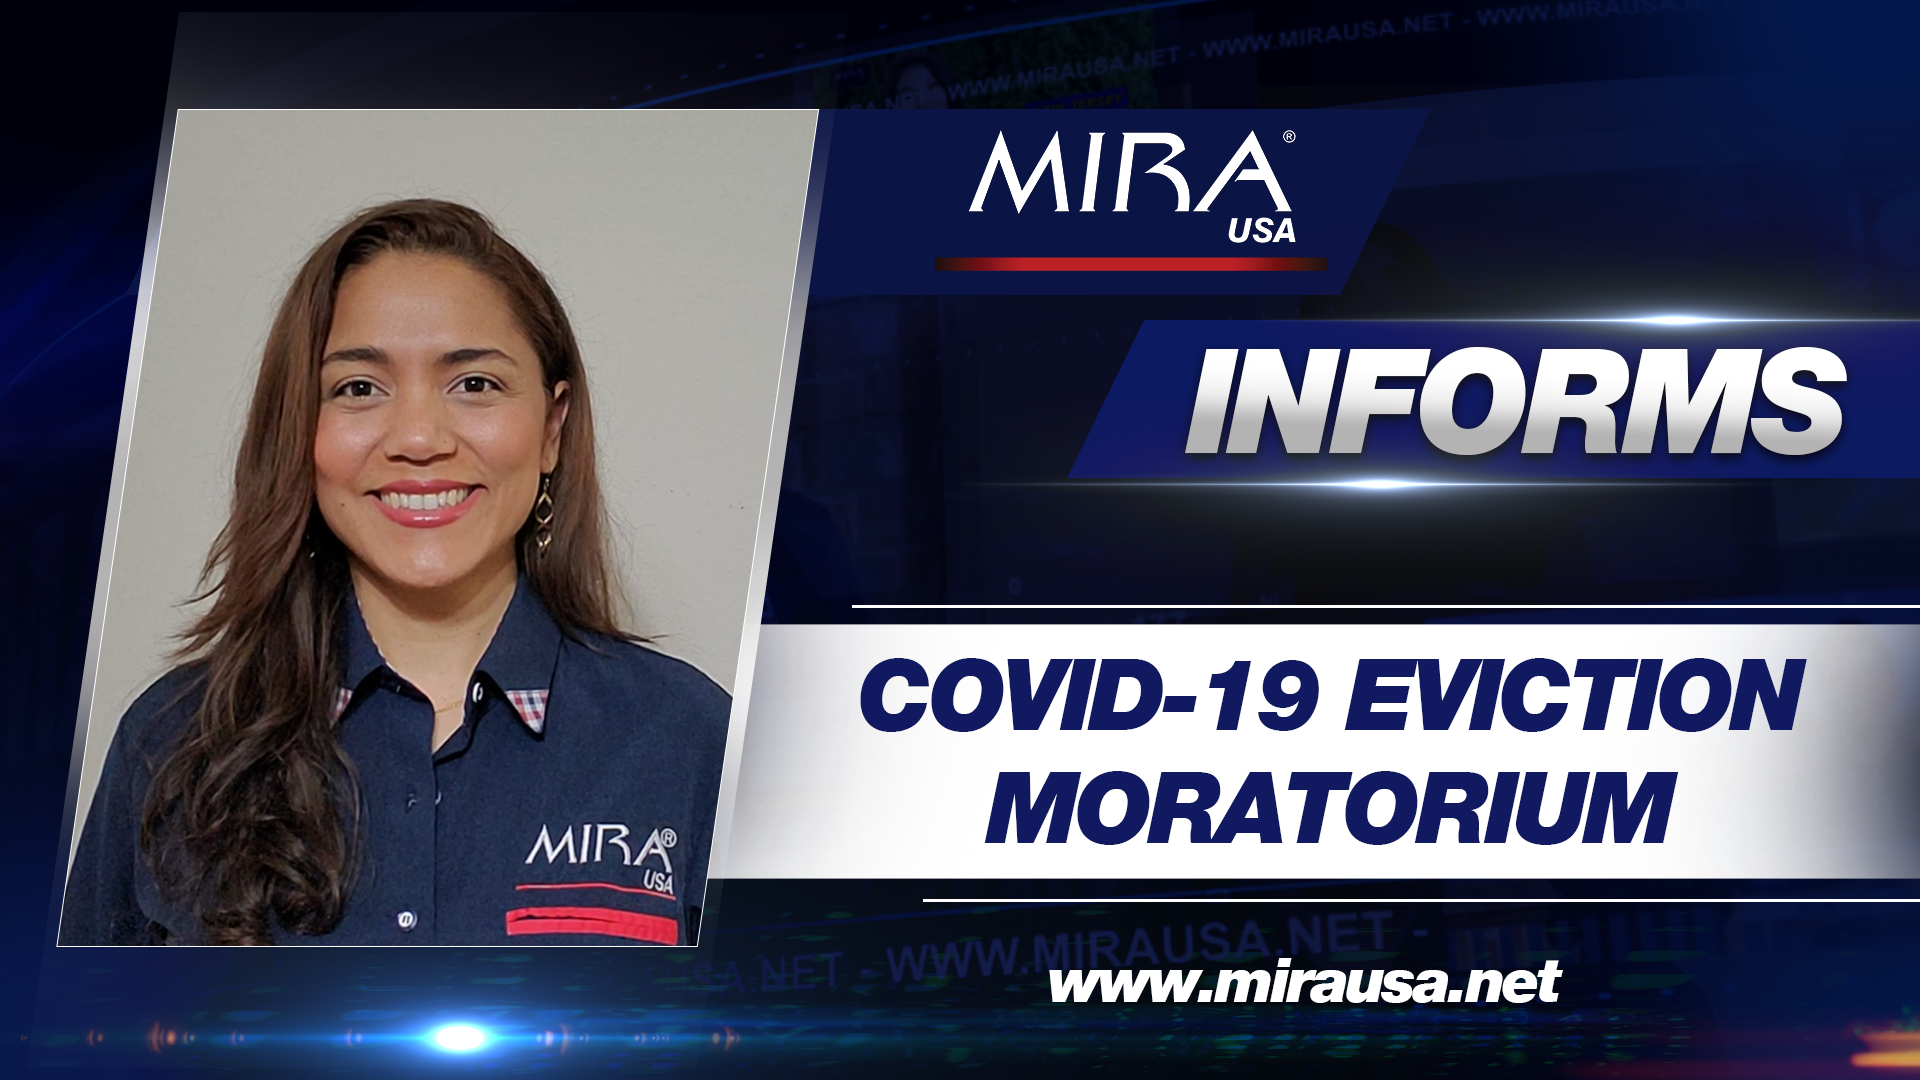 #MIRAUSAInforms: COVID-19 Eviction Moratorium